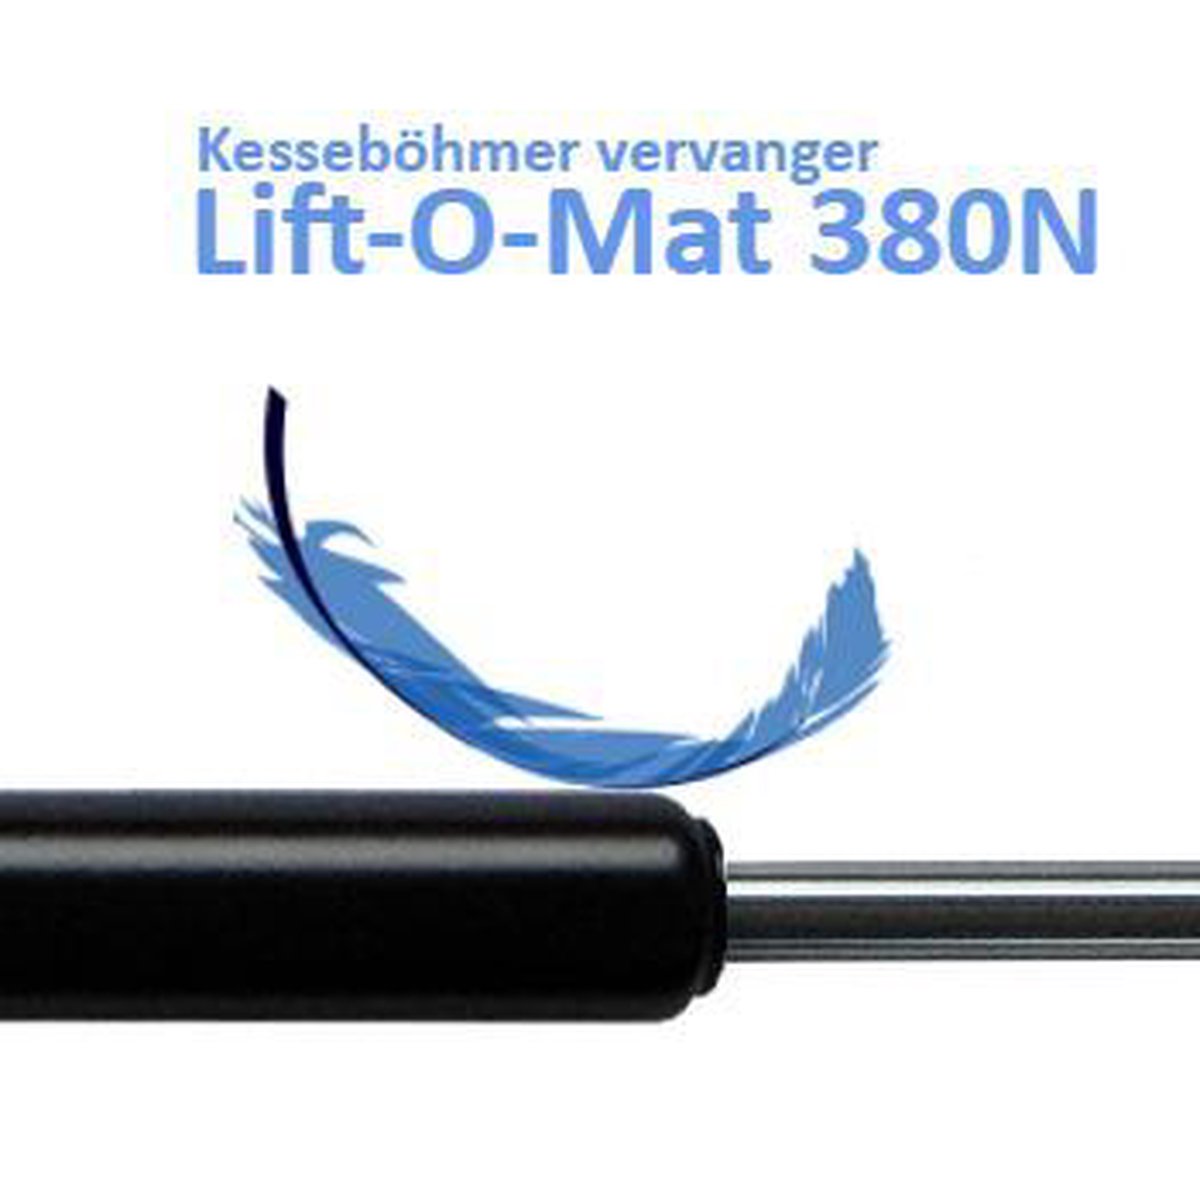 Vervanger voor Kesseböhmer Lift-O-Mat 380N gasveer | bol.com